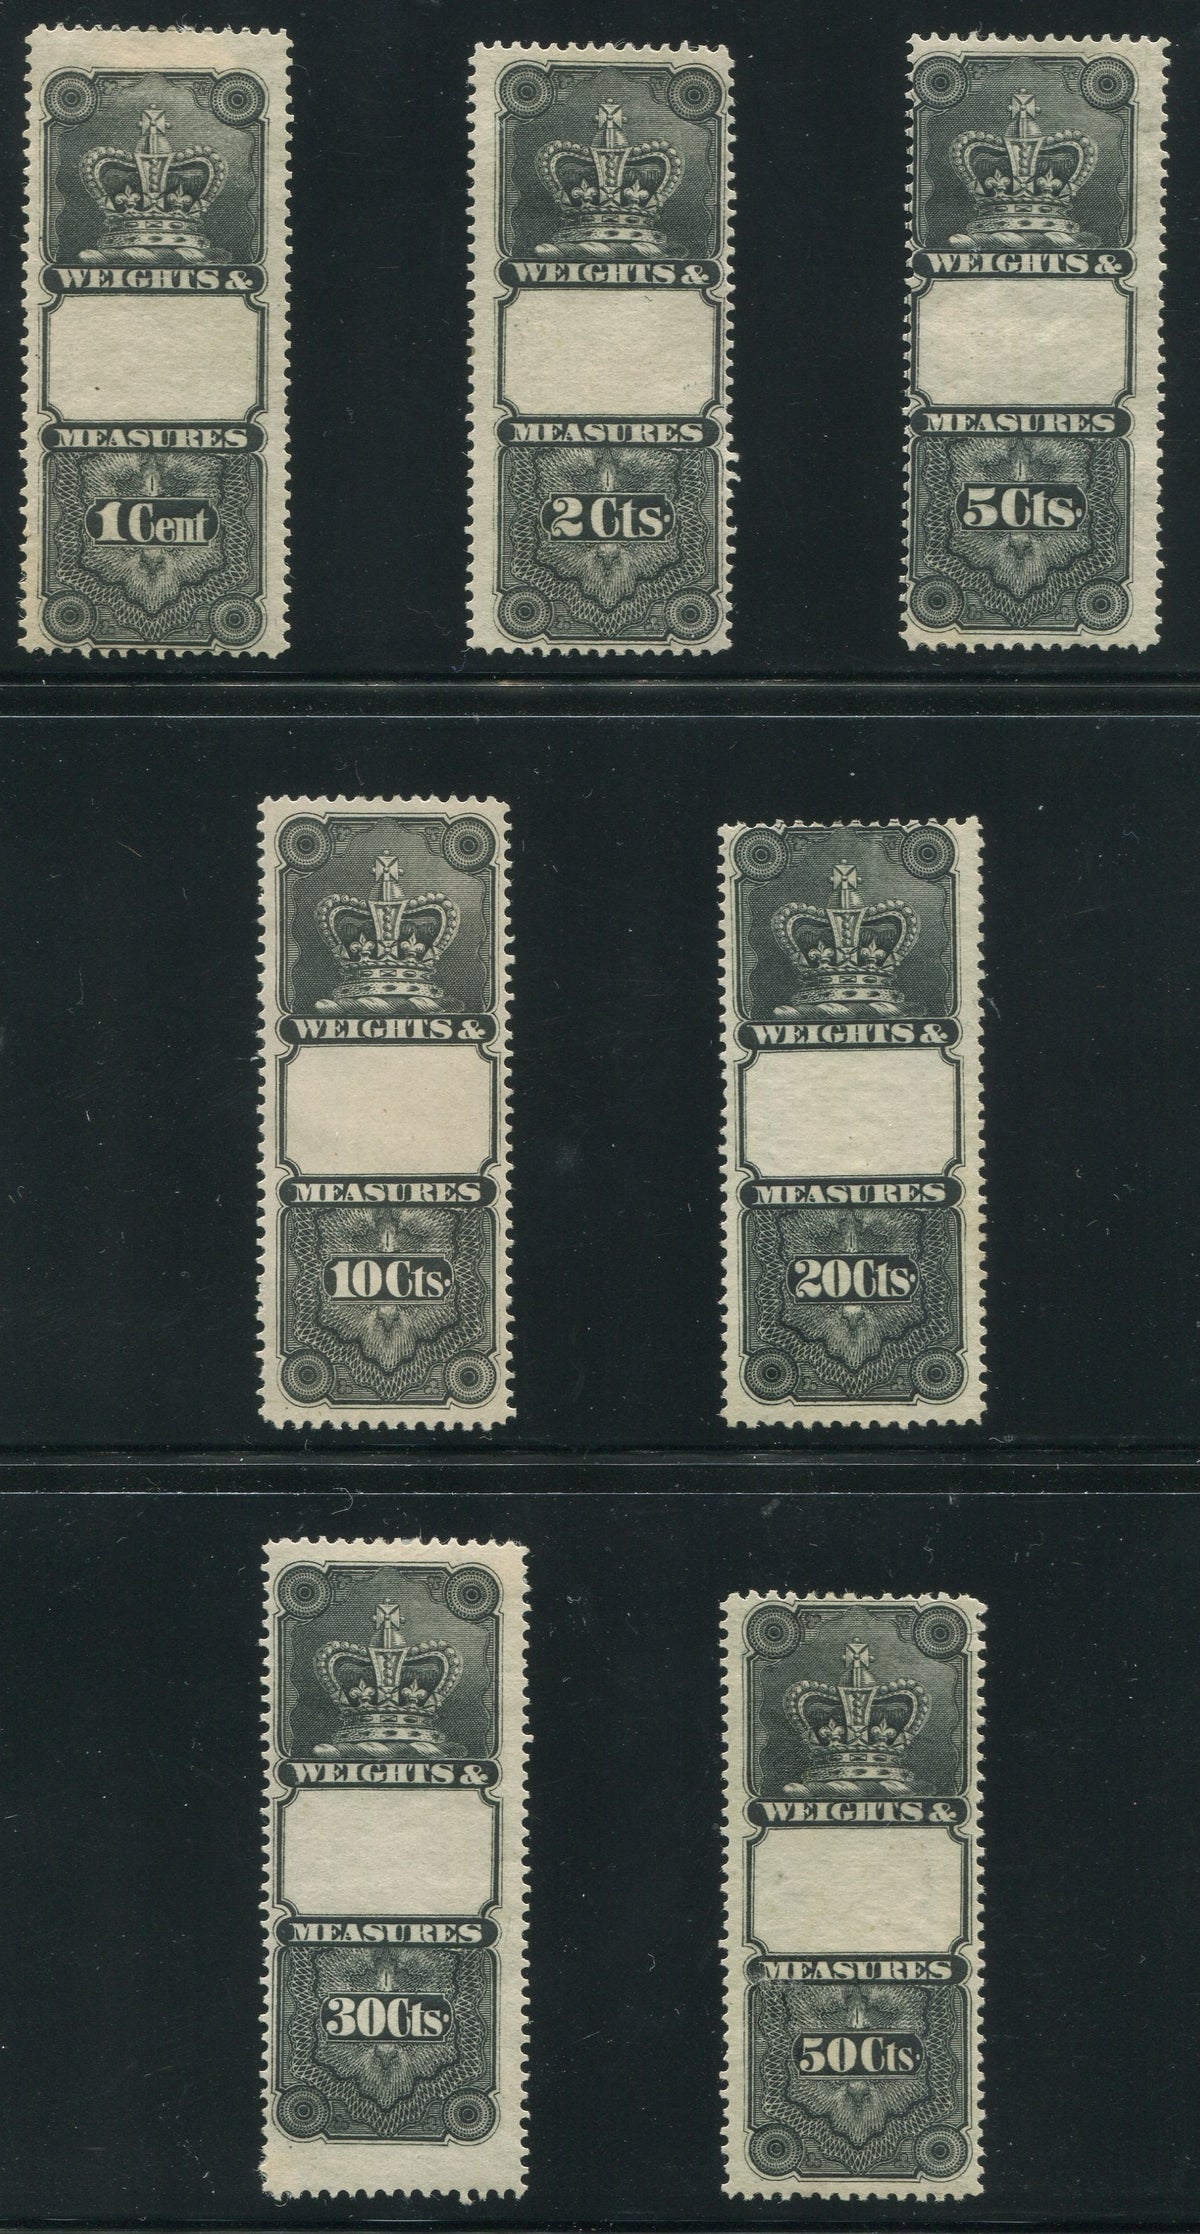 0000WM2010 - FWM - Unfinished Stamps